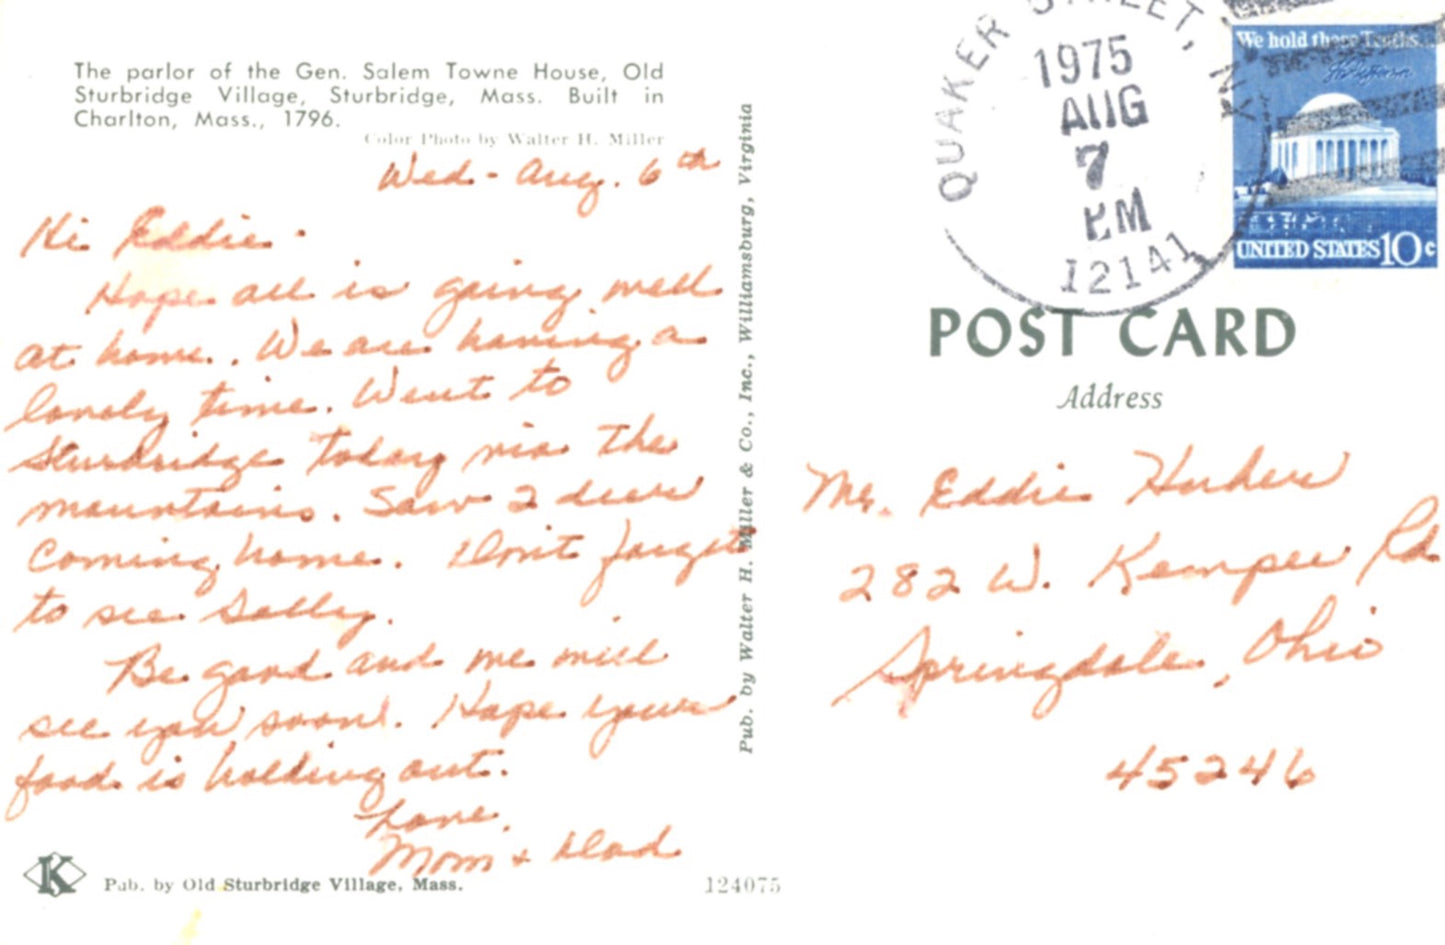 General Salem Towne House Parlor OLD STURBRIDGE VILLAGE MASSACHUSETTS Vintage Postcard